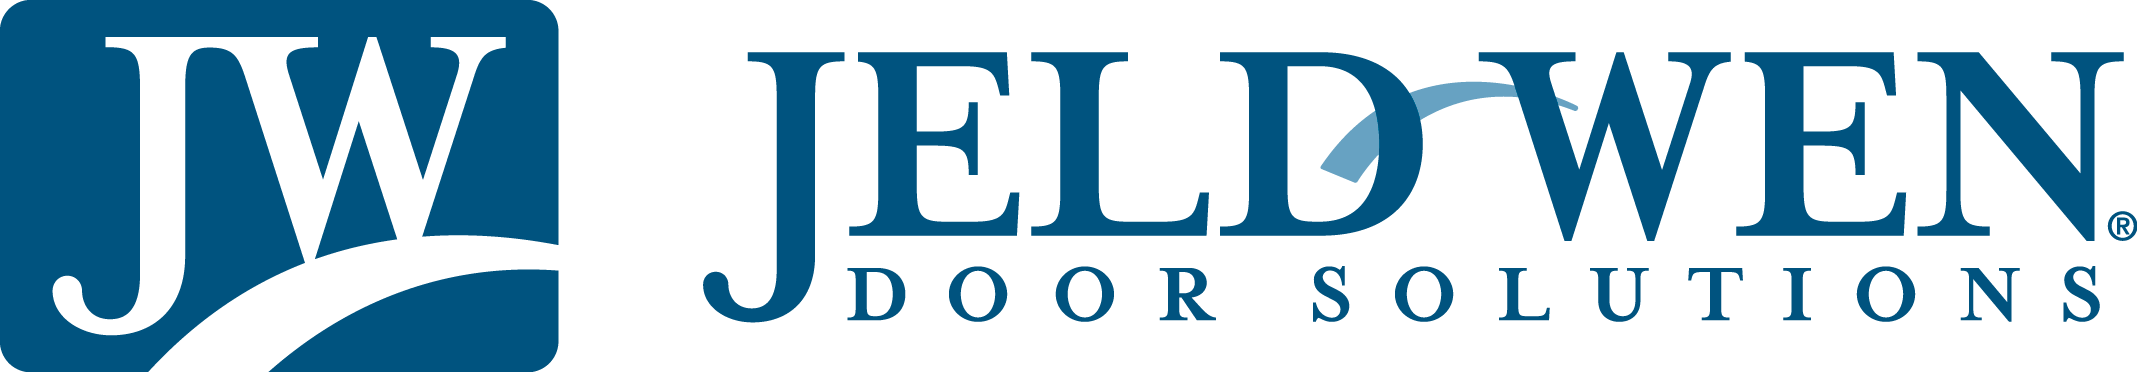 Jeld-wen_logo_2017_4C